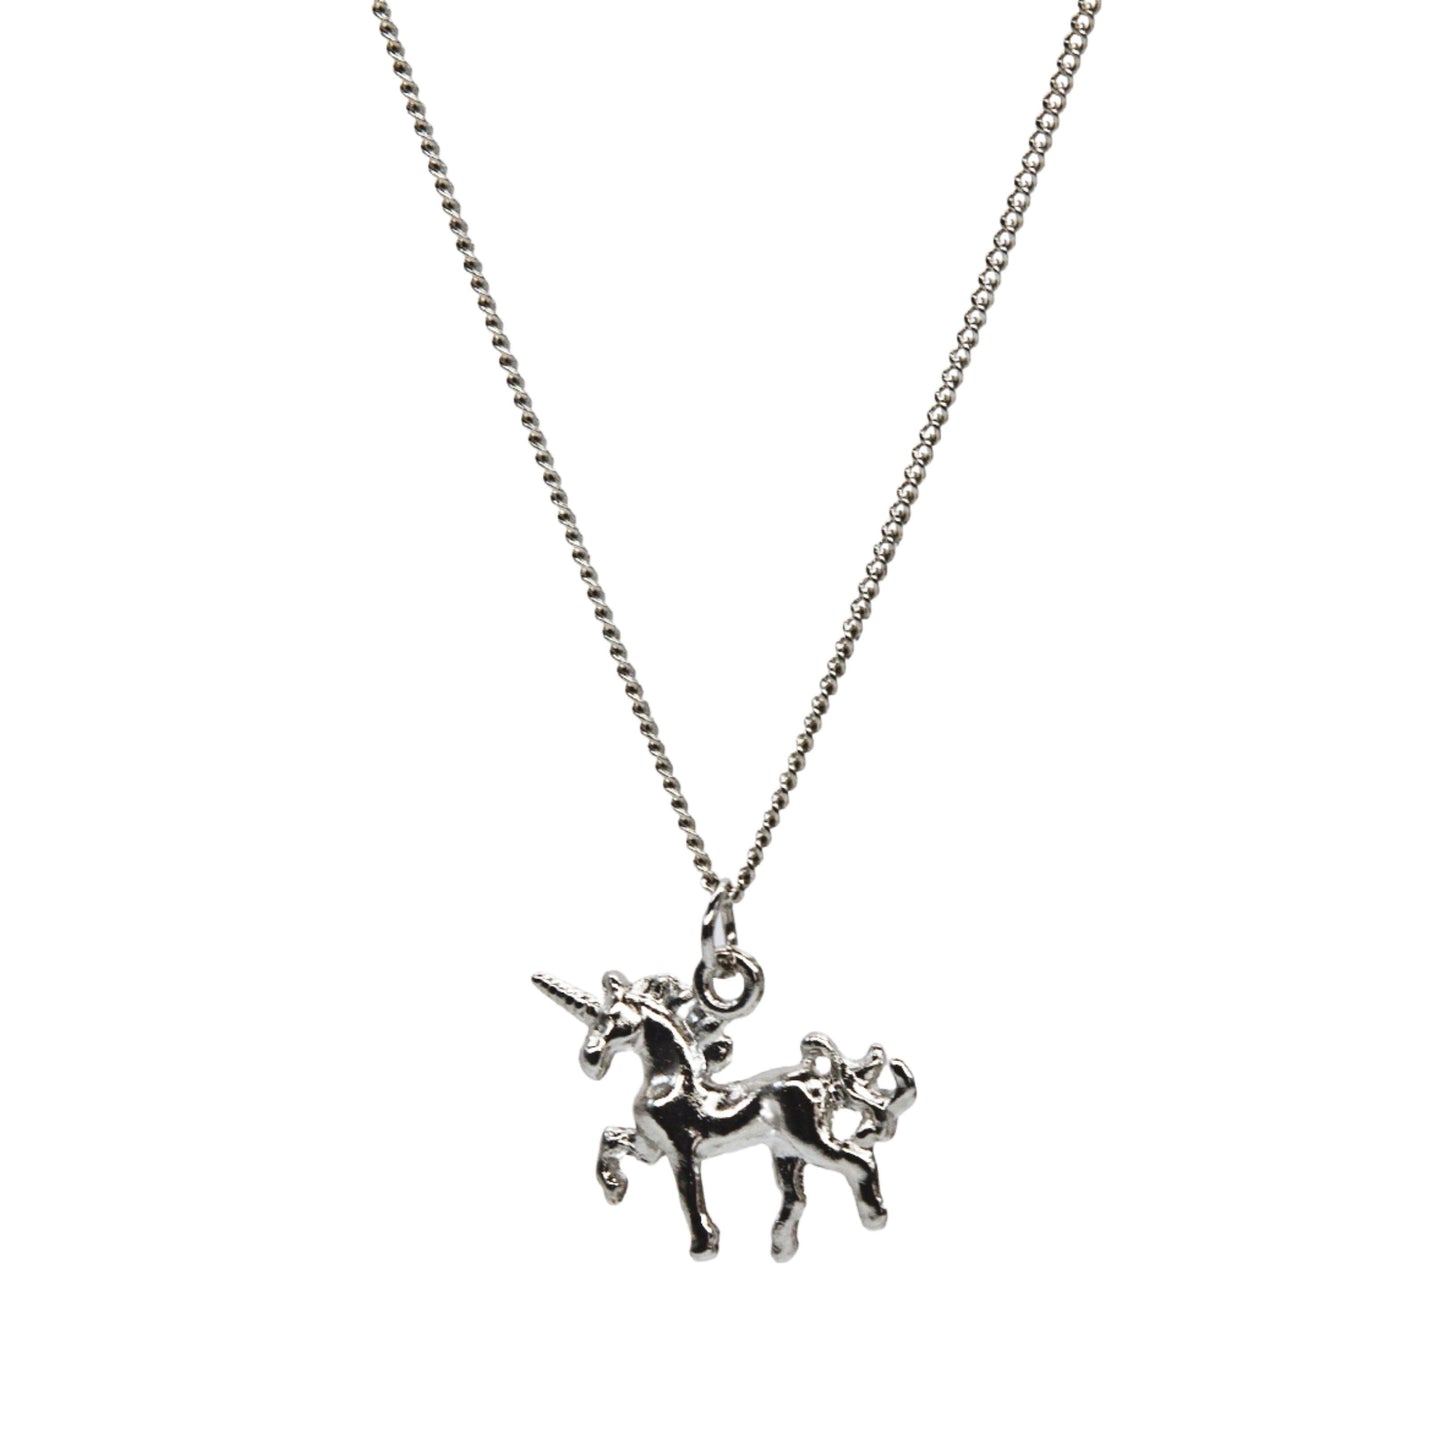 Silver Unicorn Necklace - Adjustable Length